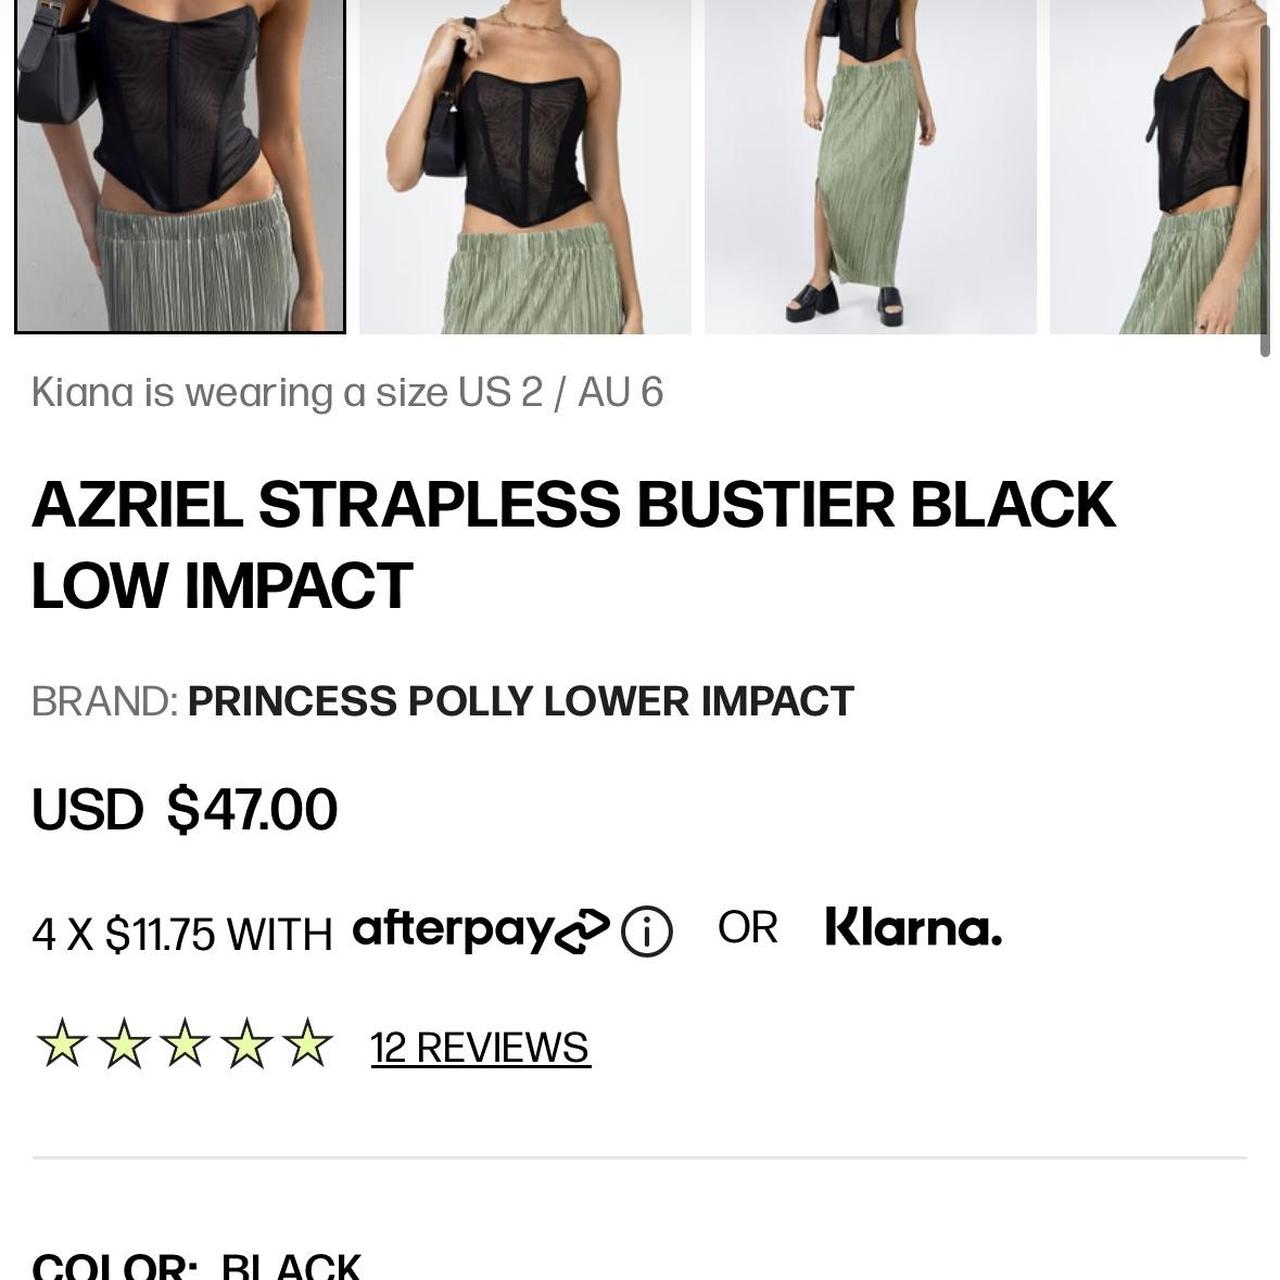 Azriel Strapless Bustier Black